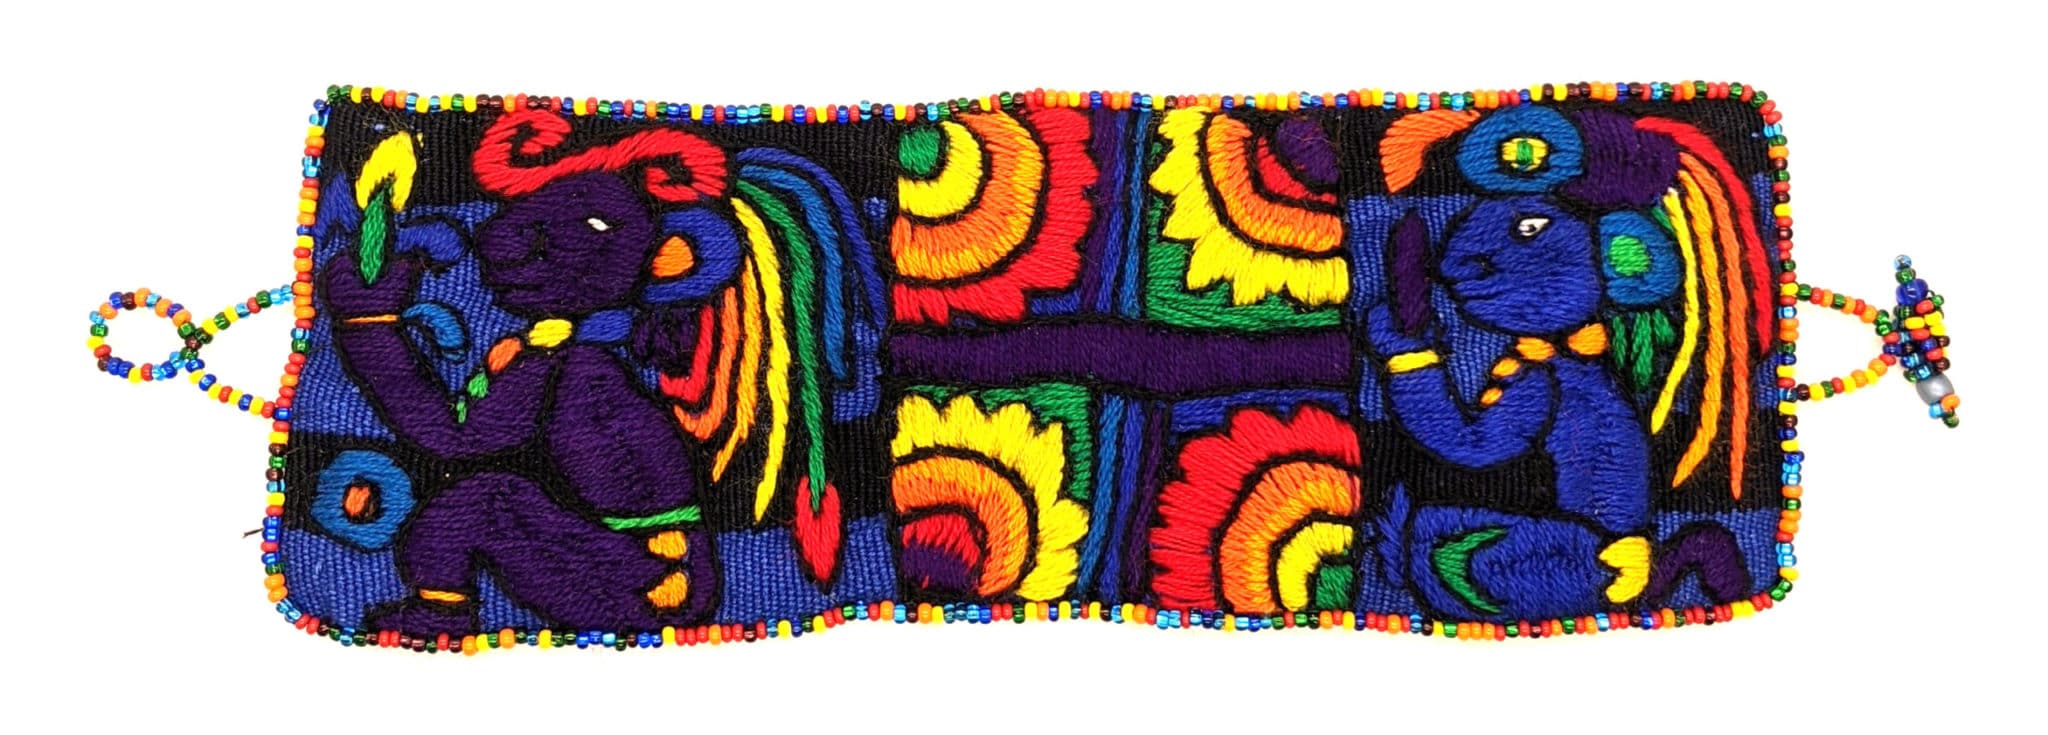 Rainbow Maya Gods and Symbols Hand-Embroidered Bracelet with Glass Beads Closure